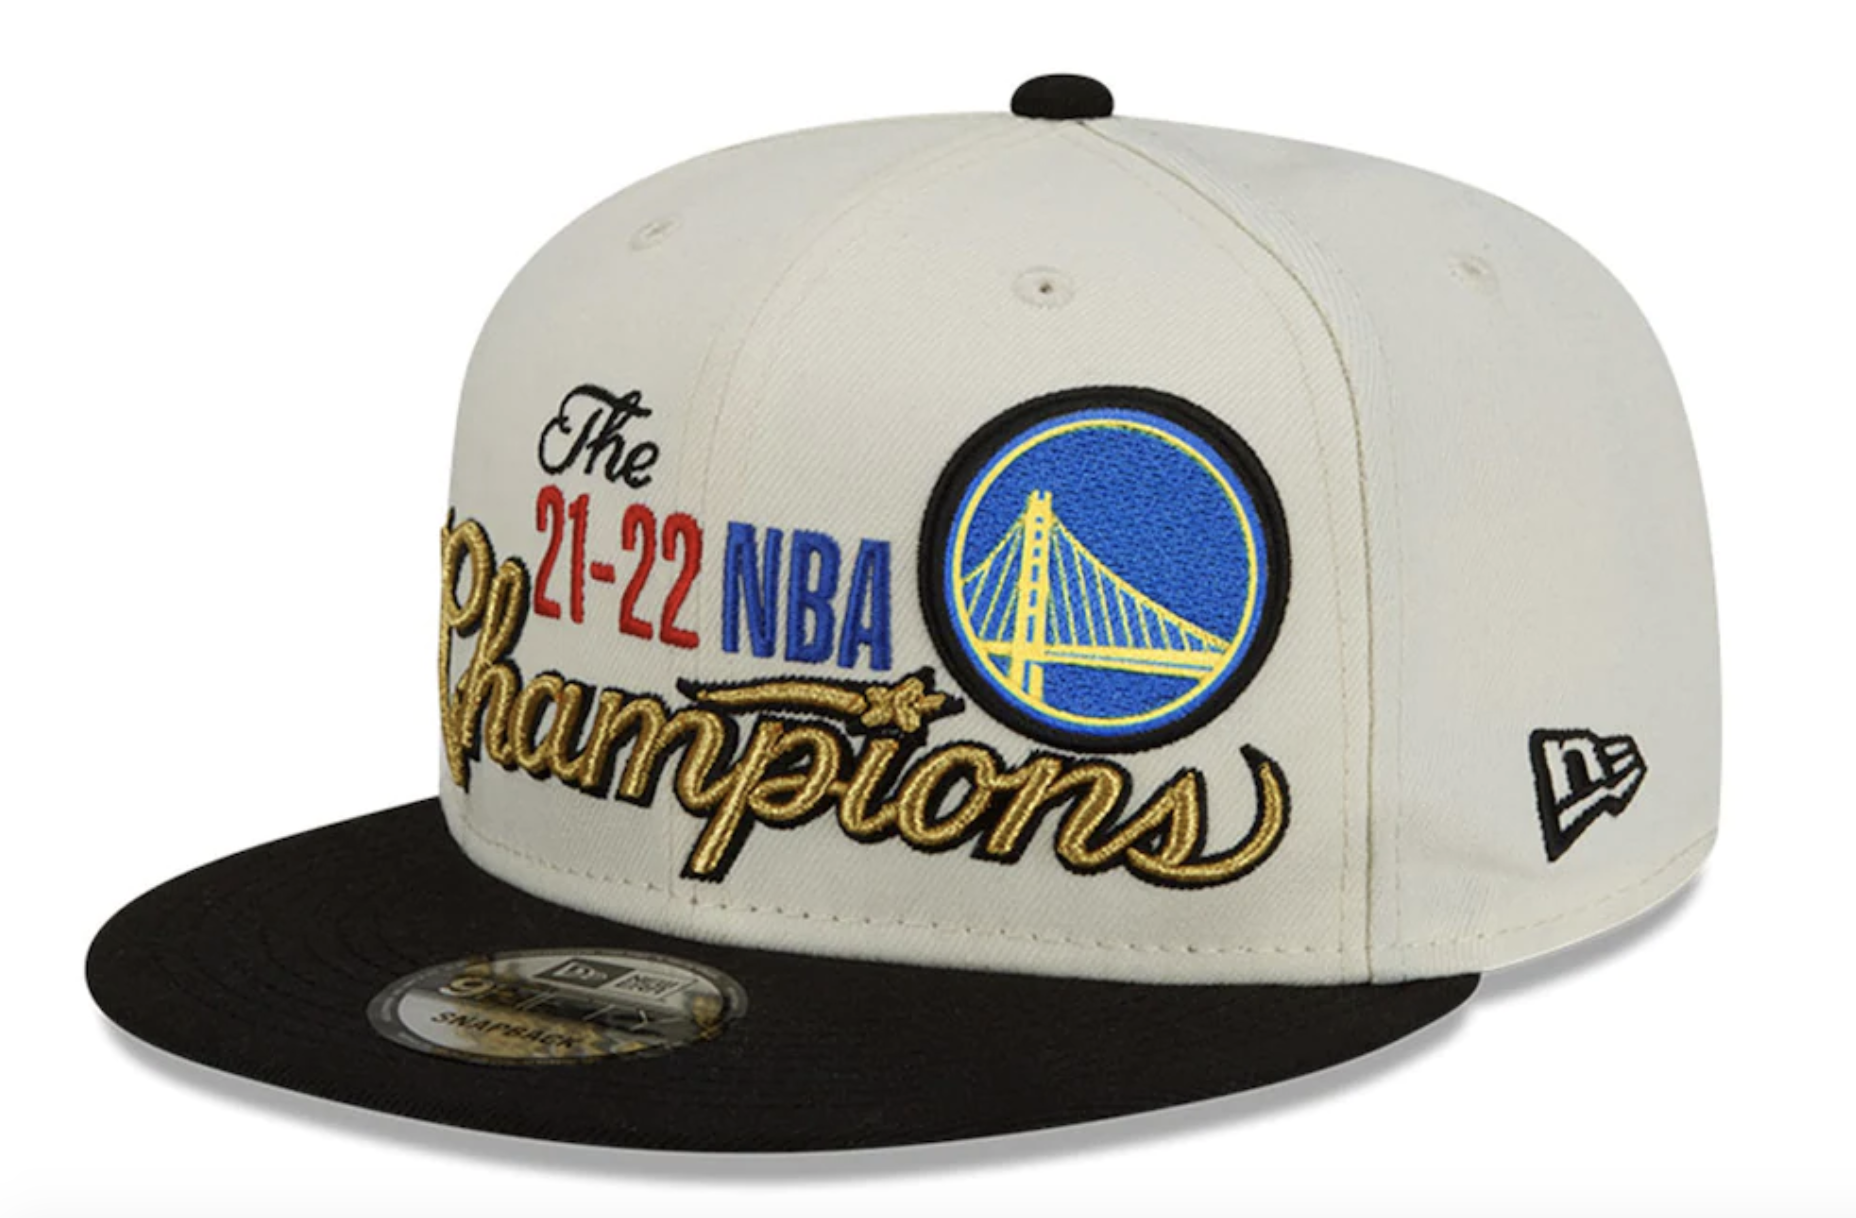 Golden State Warriors NBA Champions 2022 shirts, hats, more gear